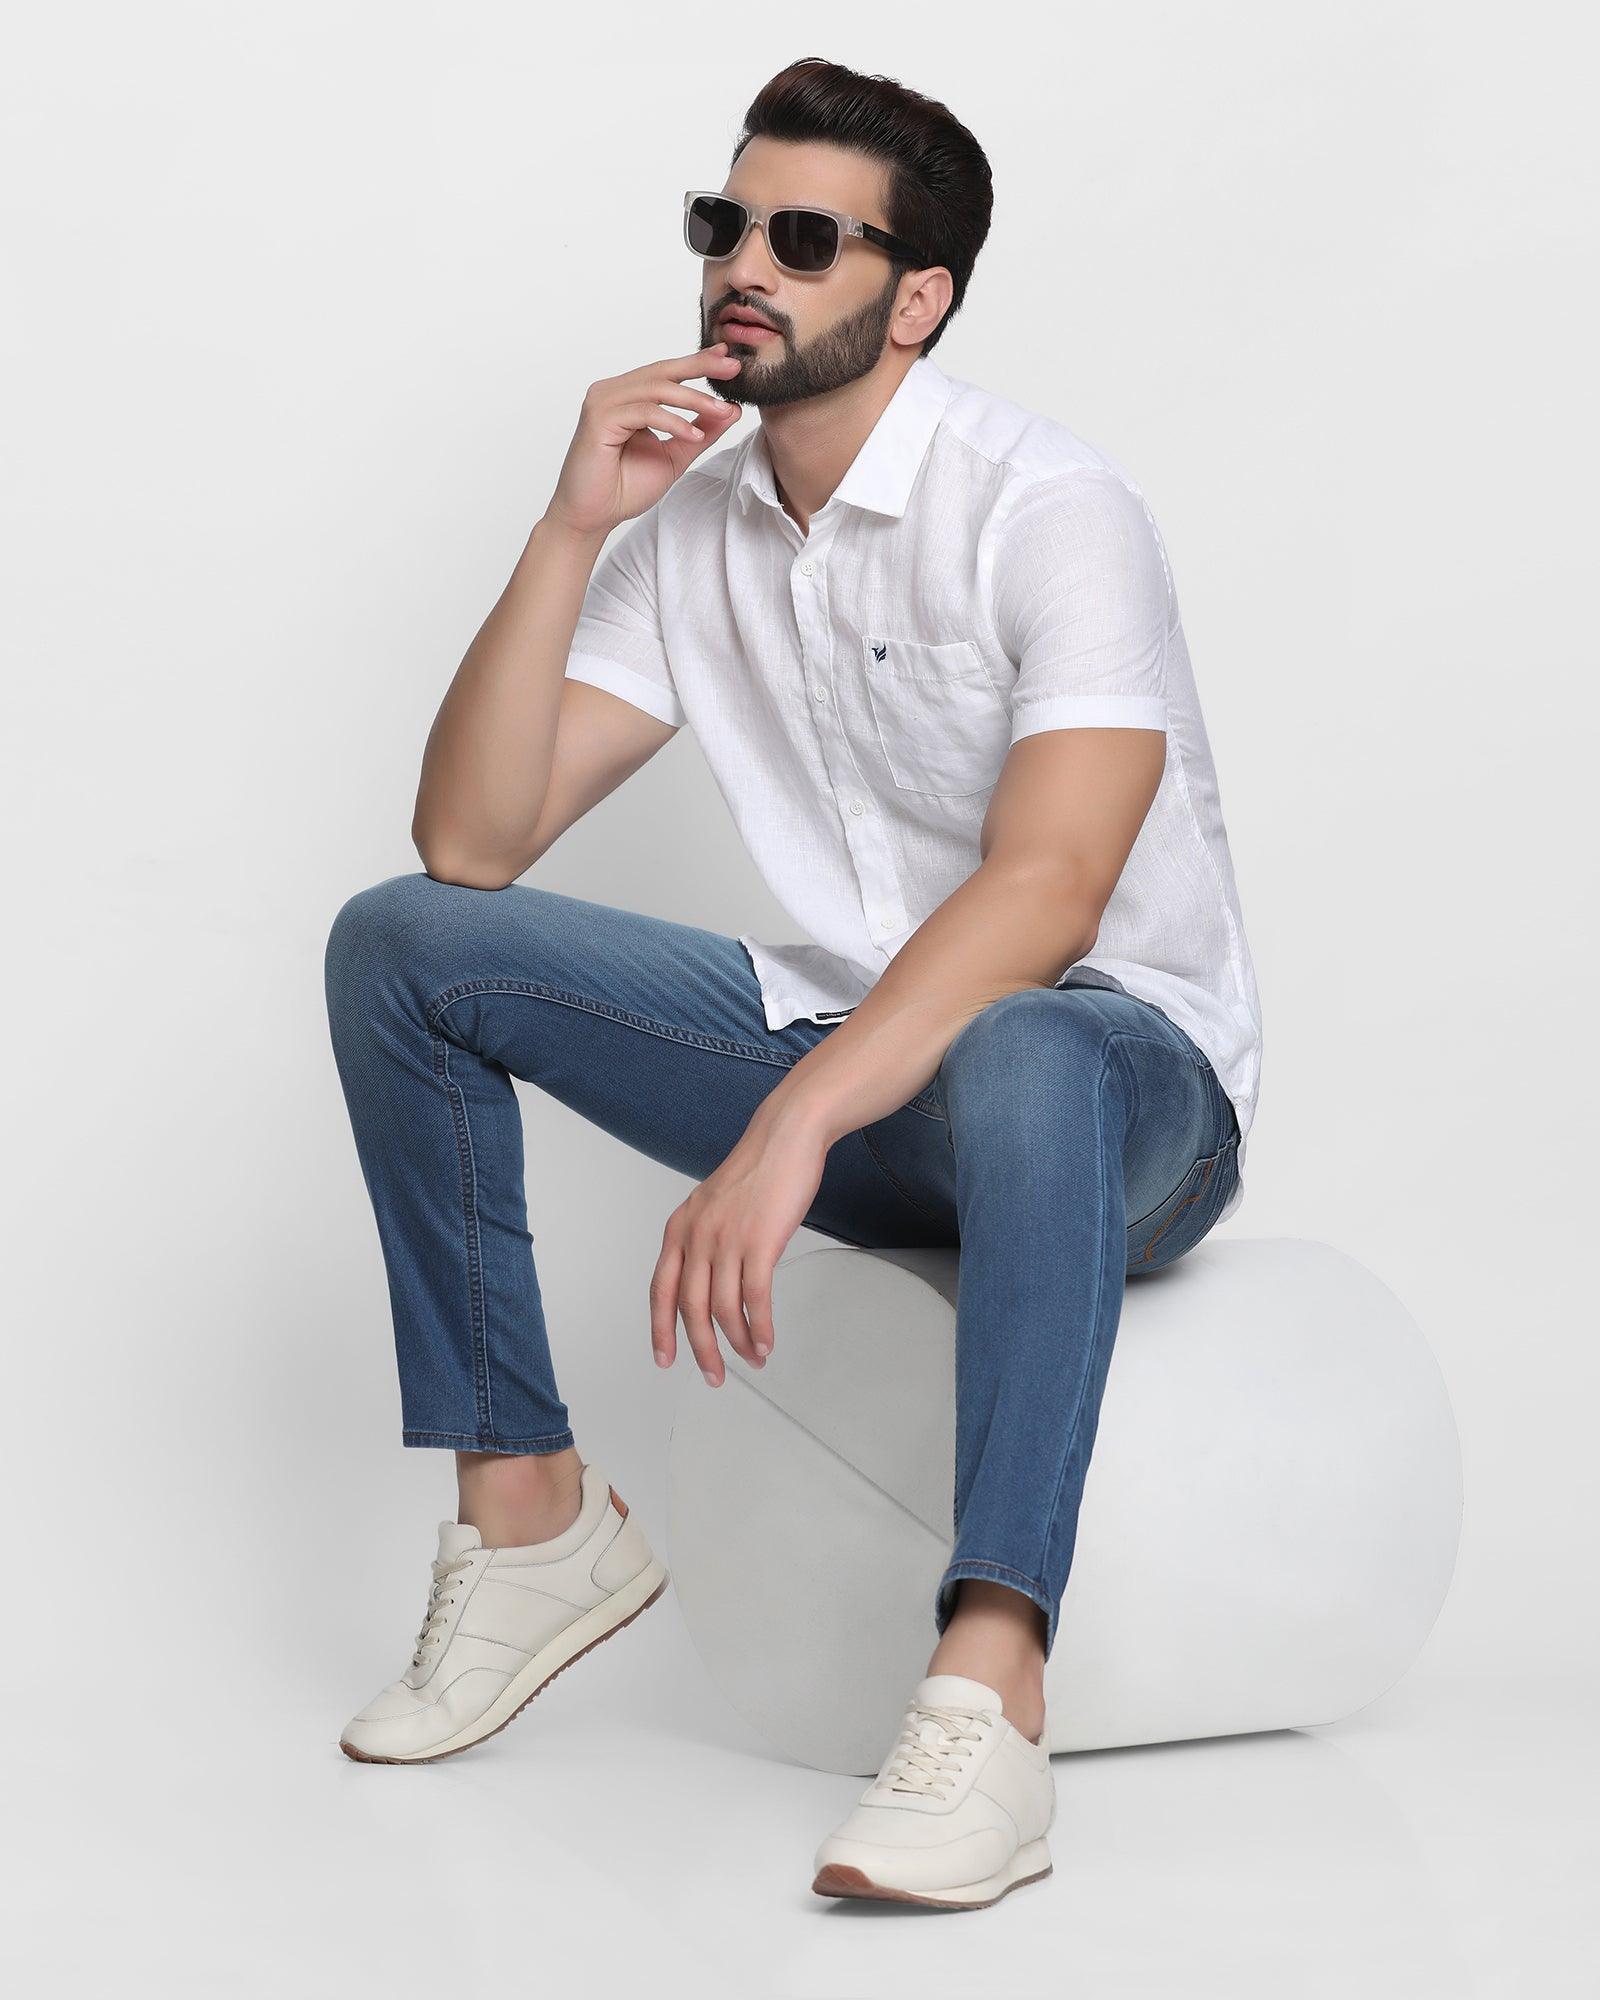 Linen Casual White Solid Shirt - Noah